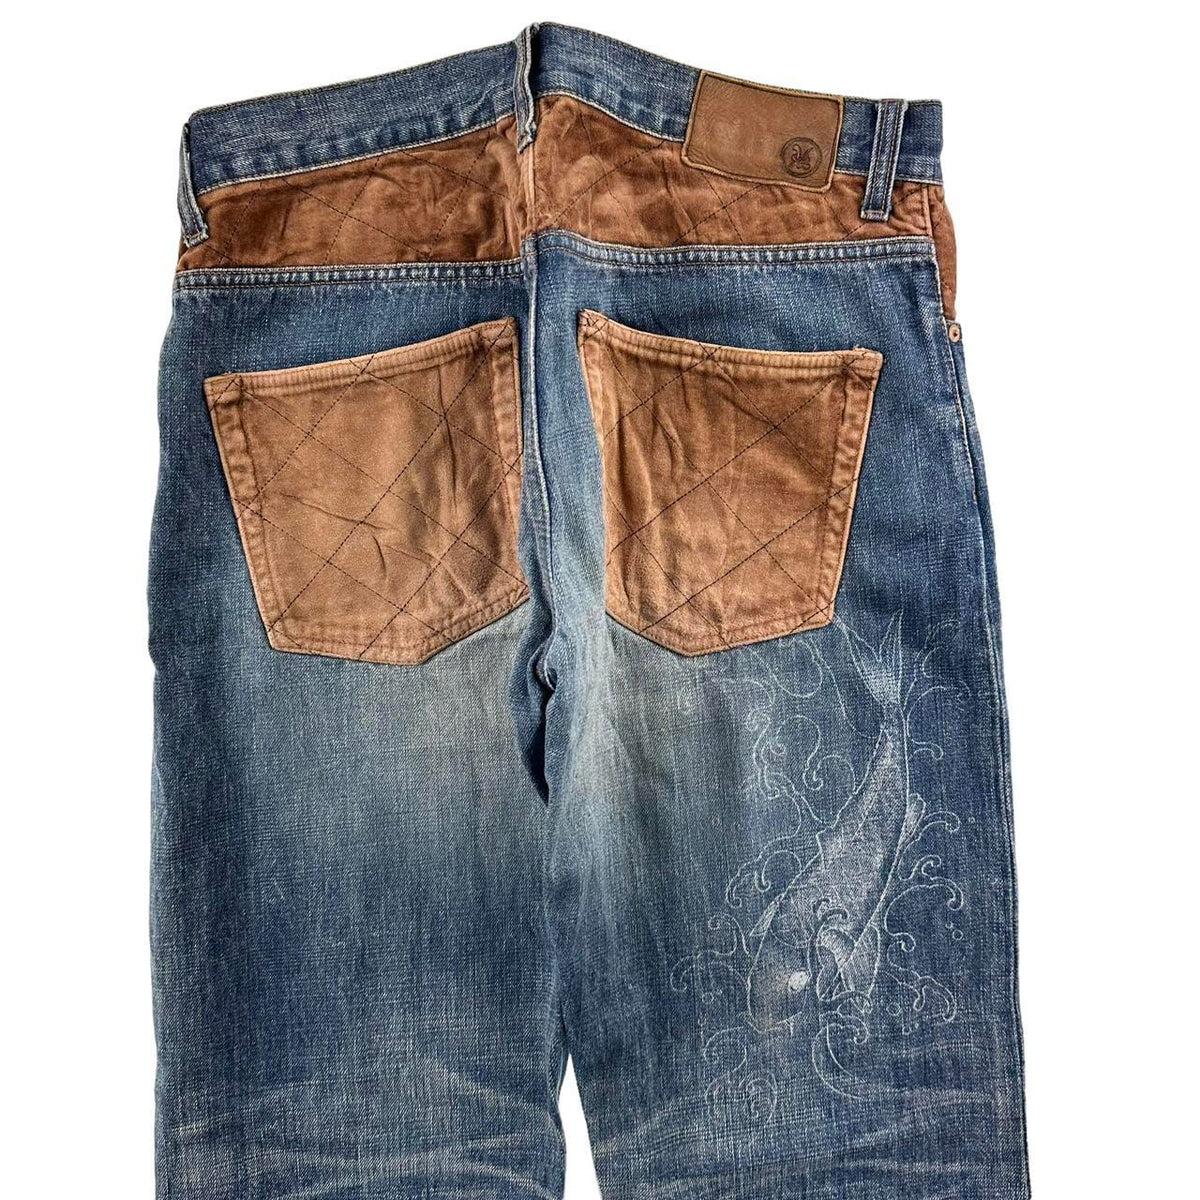 Vintage Koi fish Japanese denim jeans trousers W32